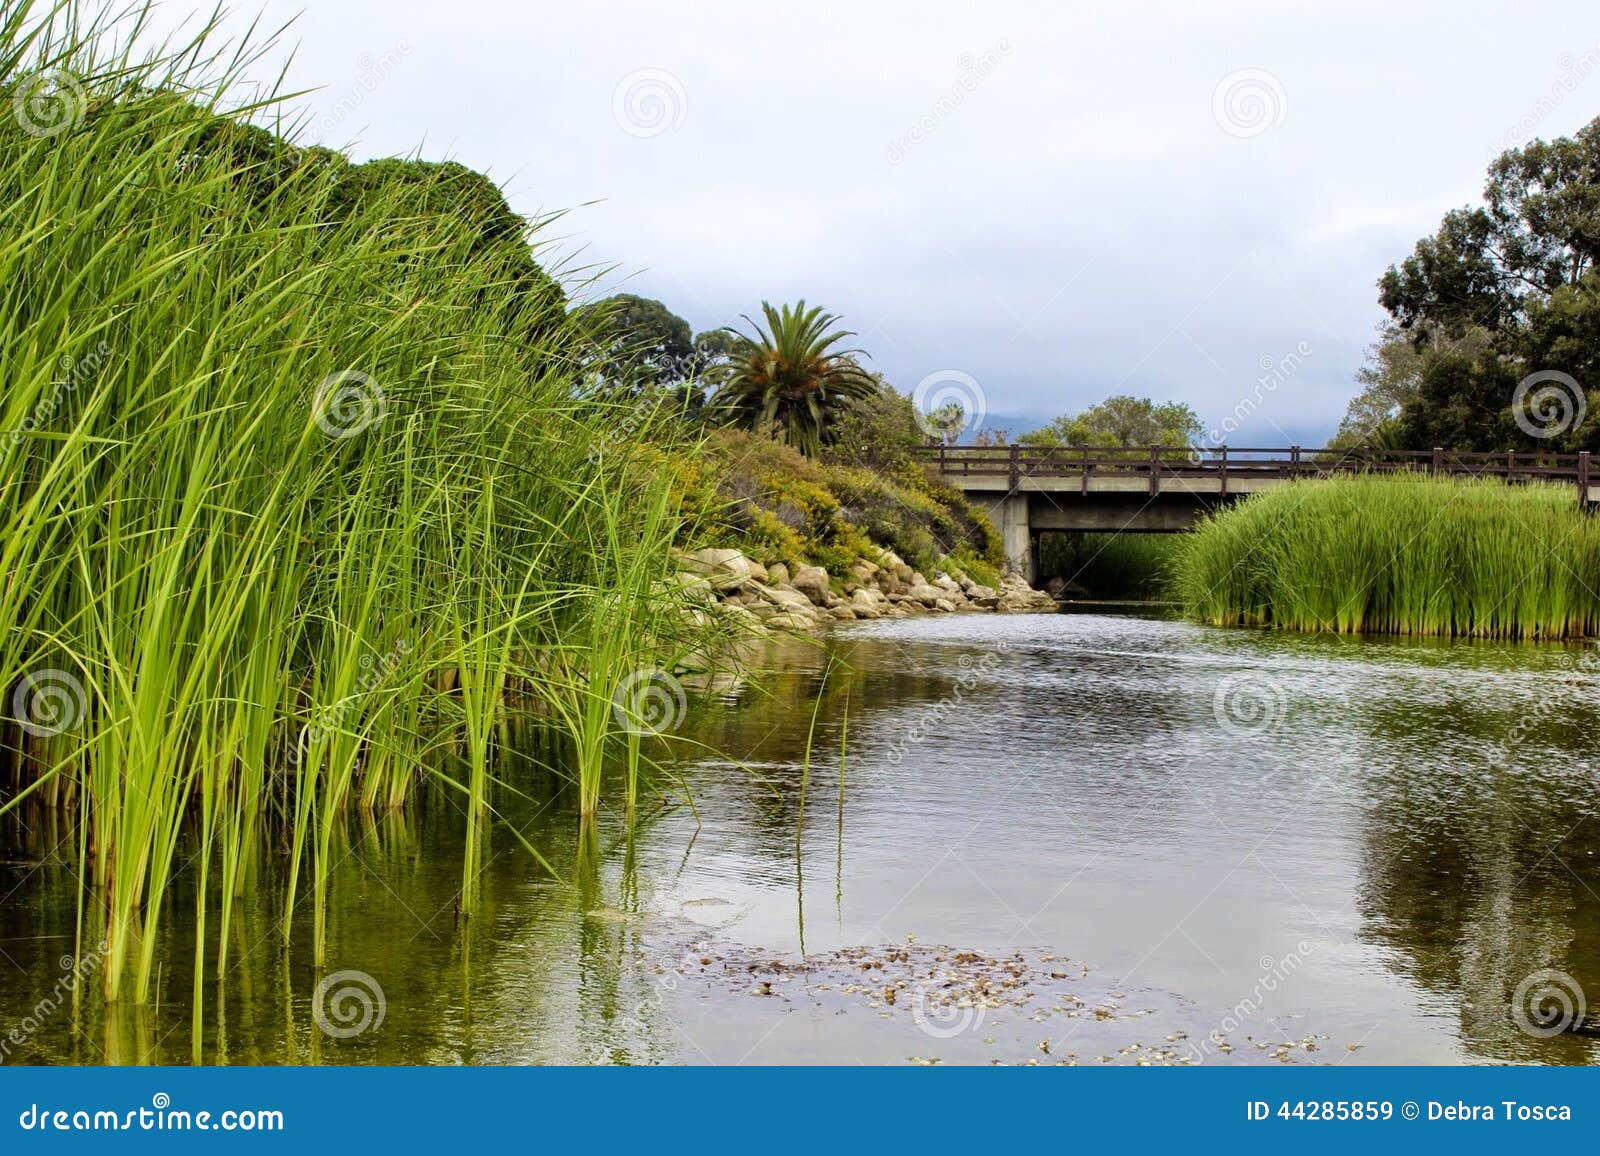 carpinteria california beach river